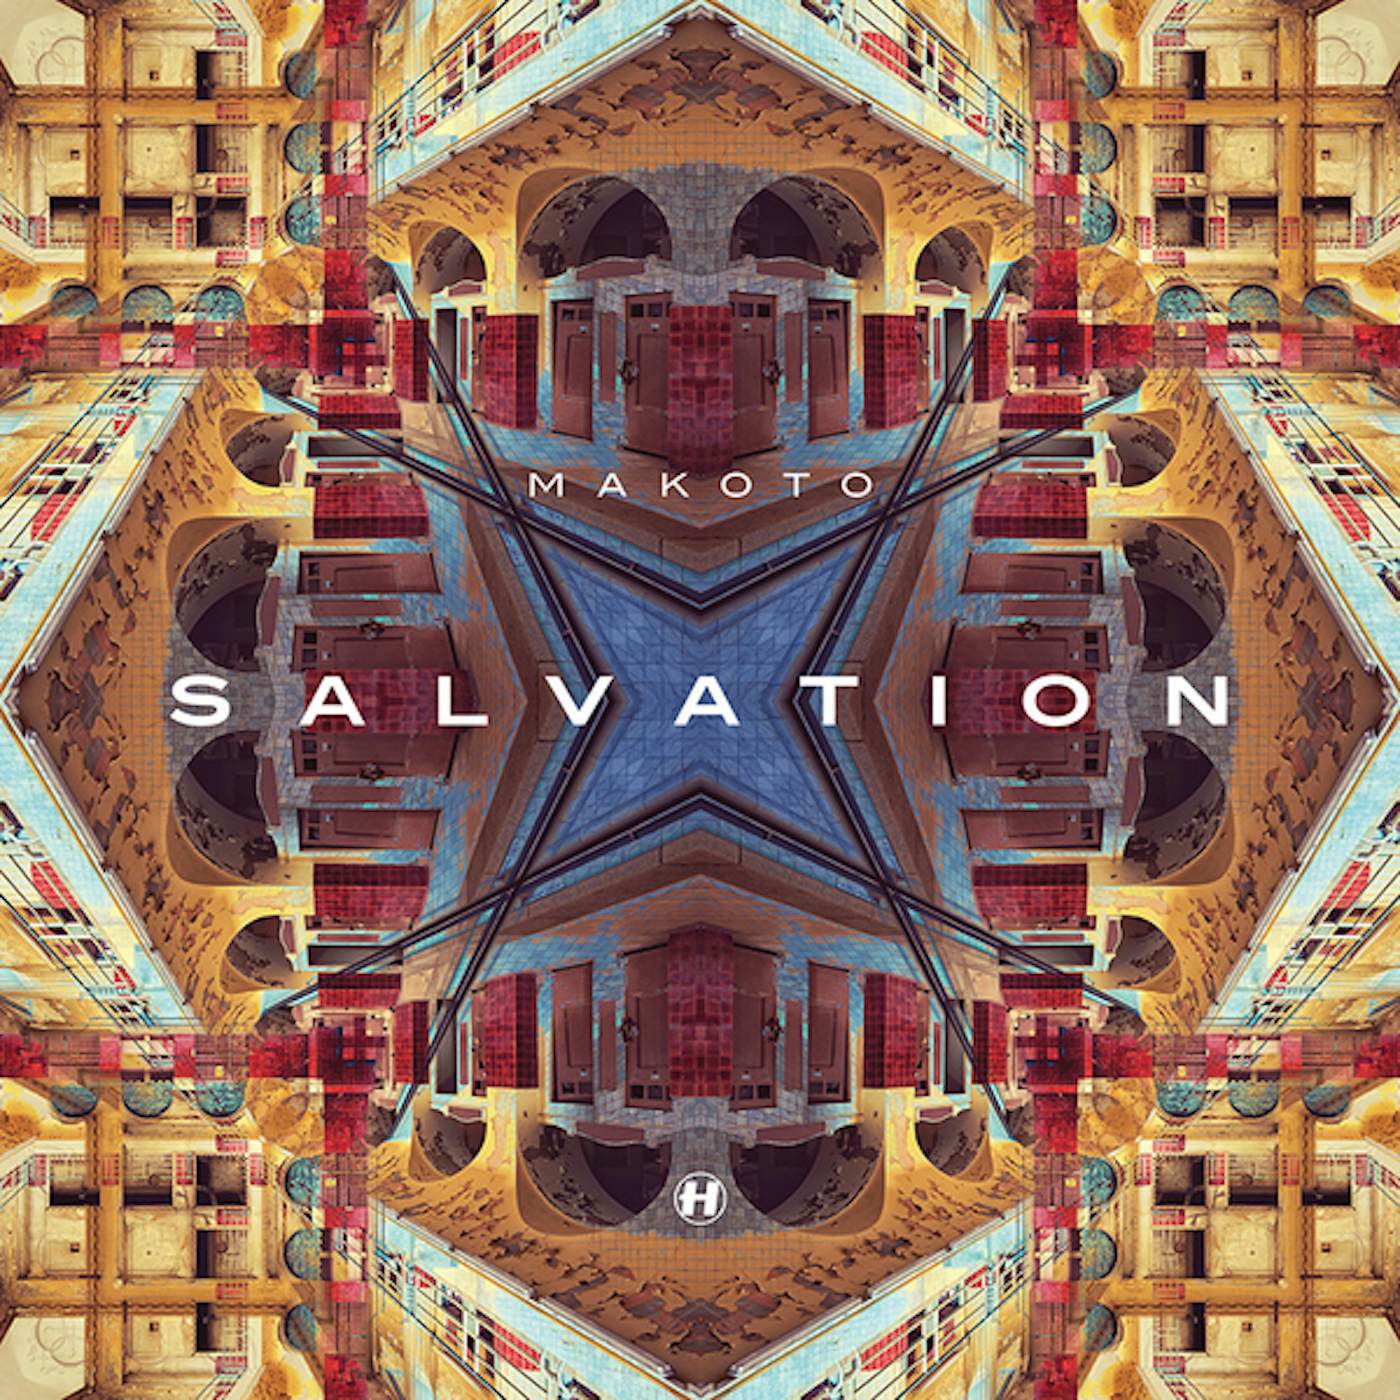 Makoto Salvation Vinyl Record